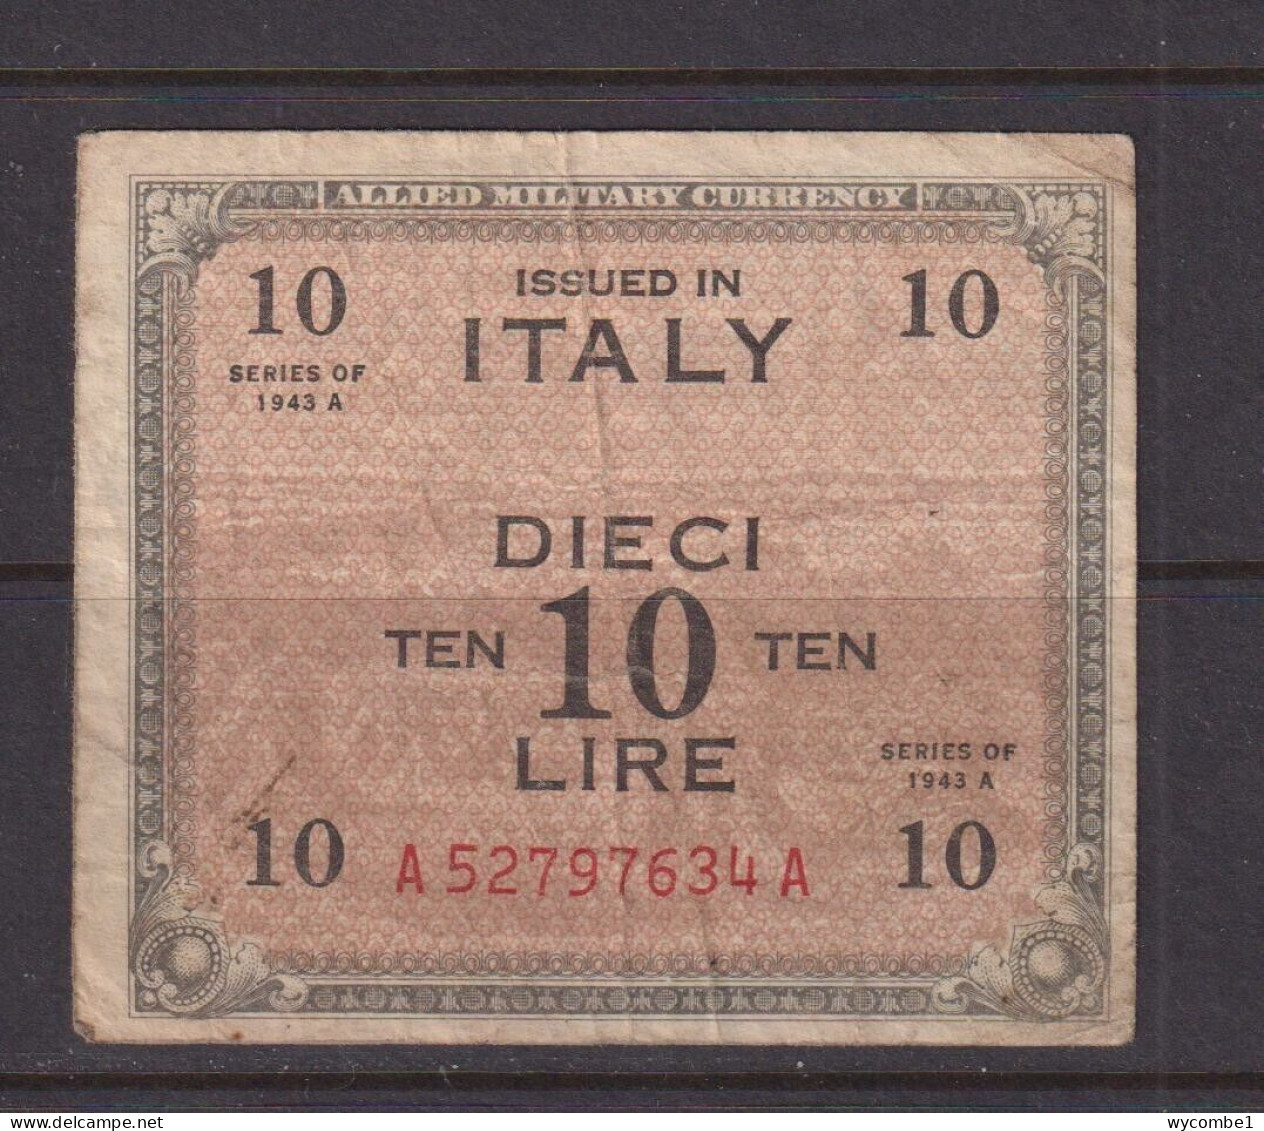 ITALY - 1943 Allied Military Currency 10 Lira Circulated Banknote - Ocupación Aliados Segunda Guerra Mundial